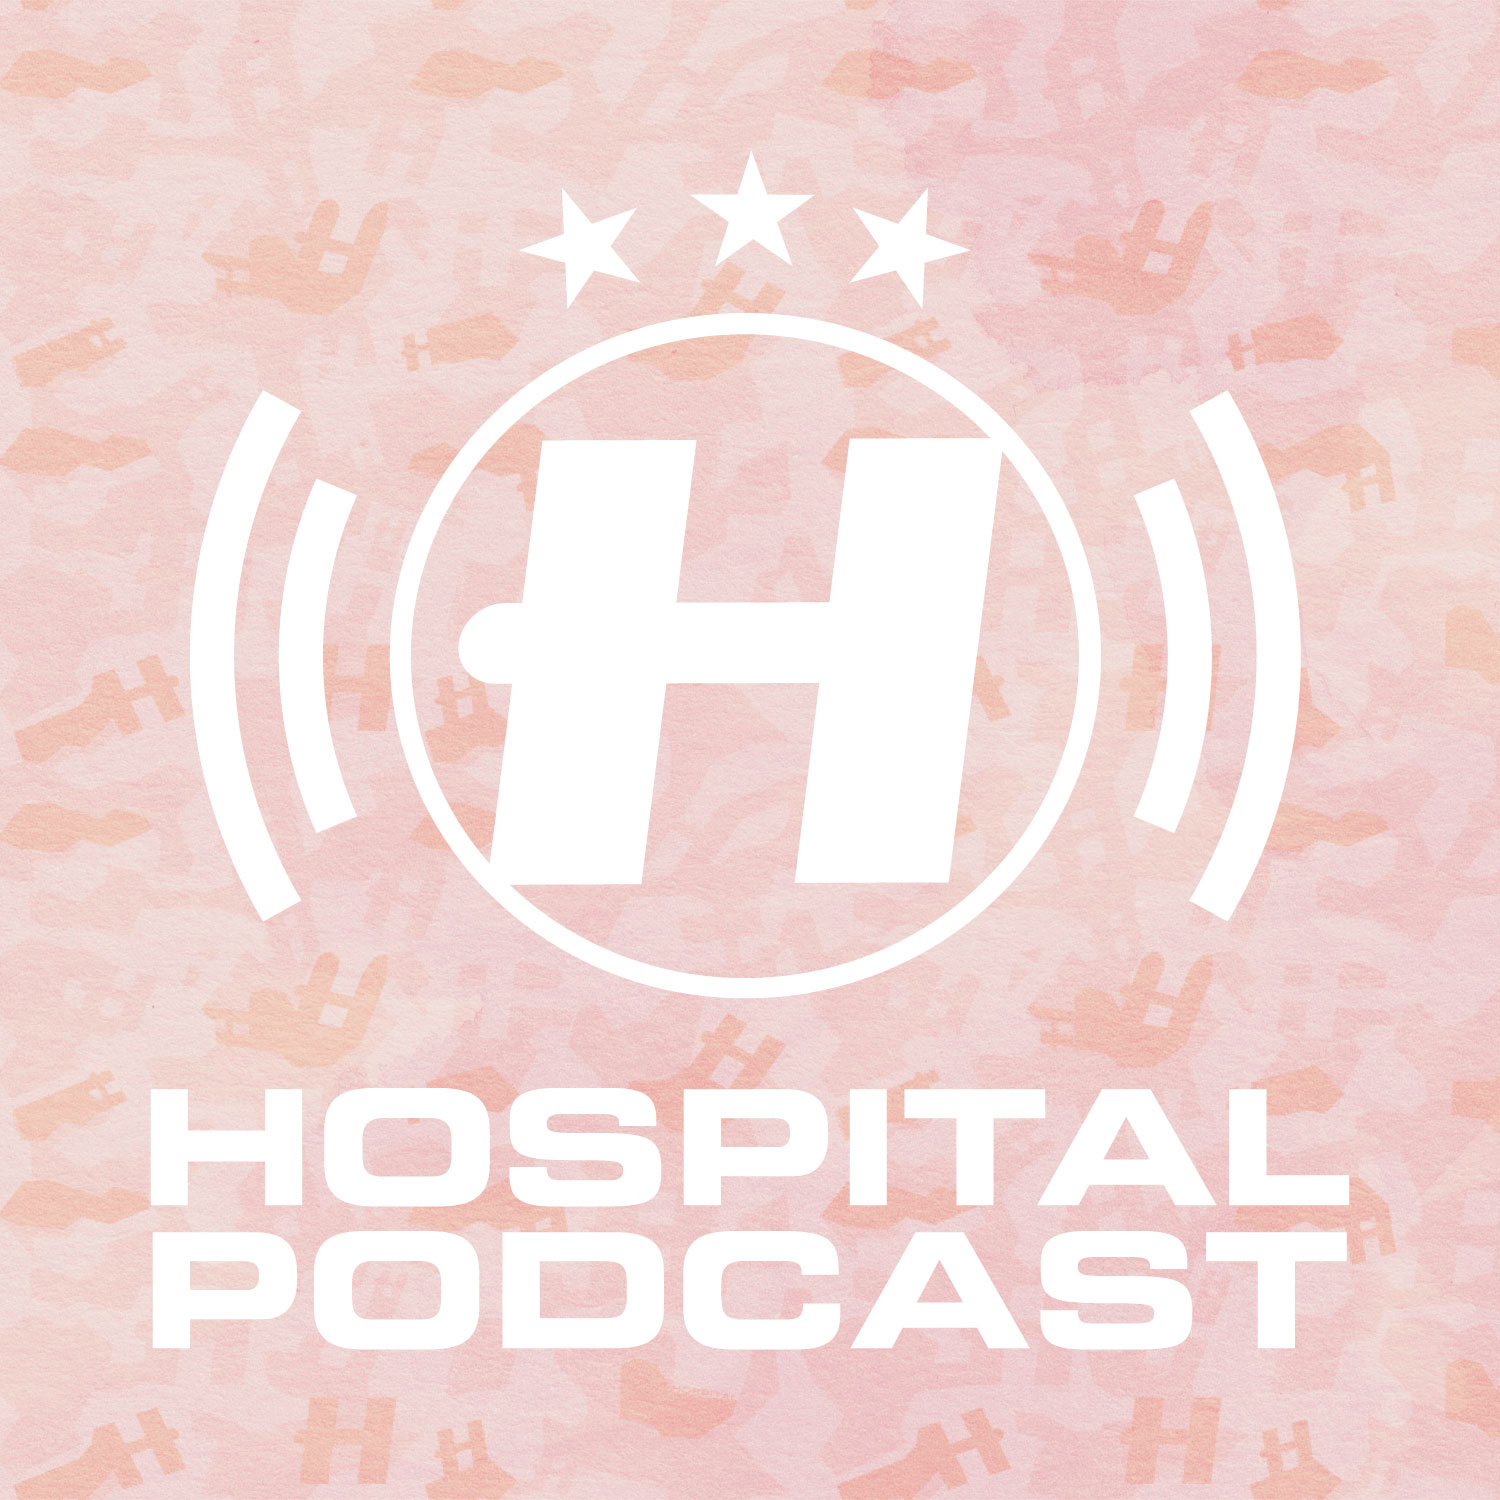 Hospital Podcast 379 with London Elektricity &amp; Mitekiss Artwork